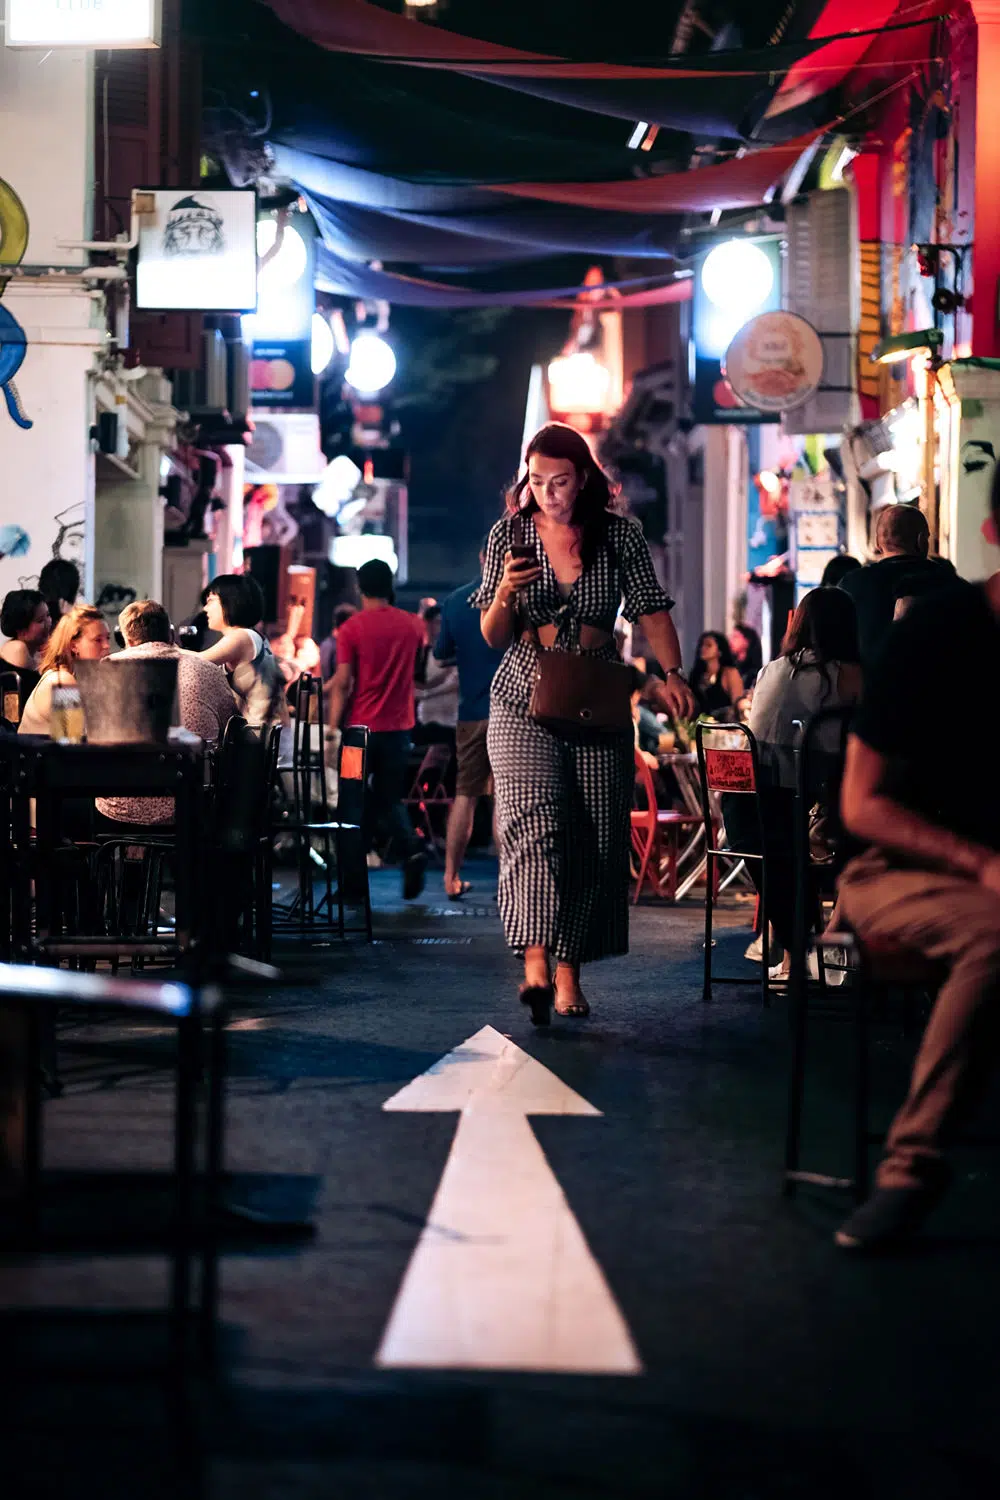 Walking through the Arab Street. Photo: Christian Chen / Unsplash